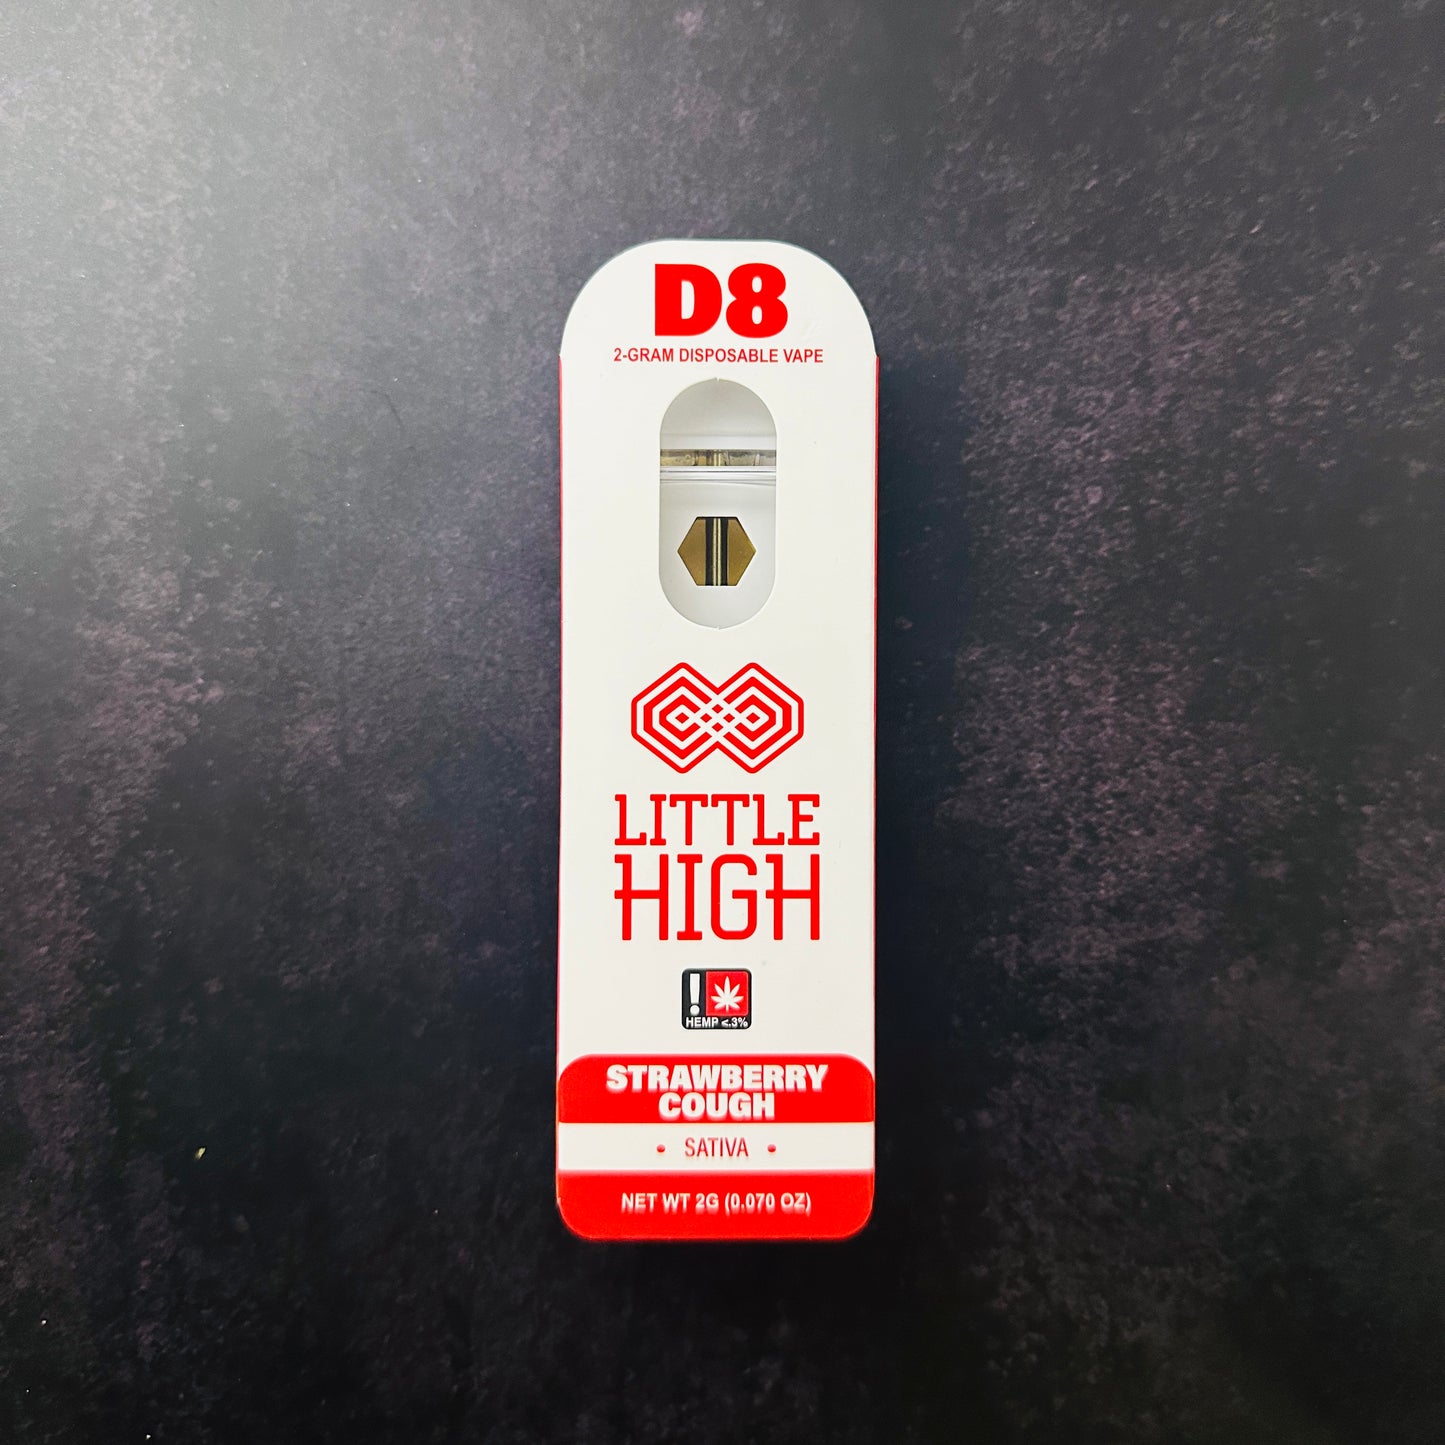 Lil High D8 disposable 2g